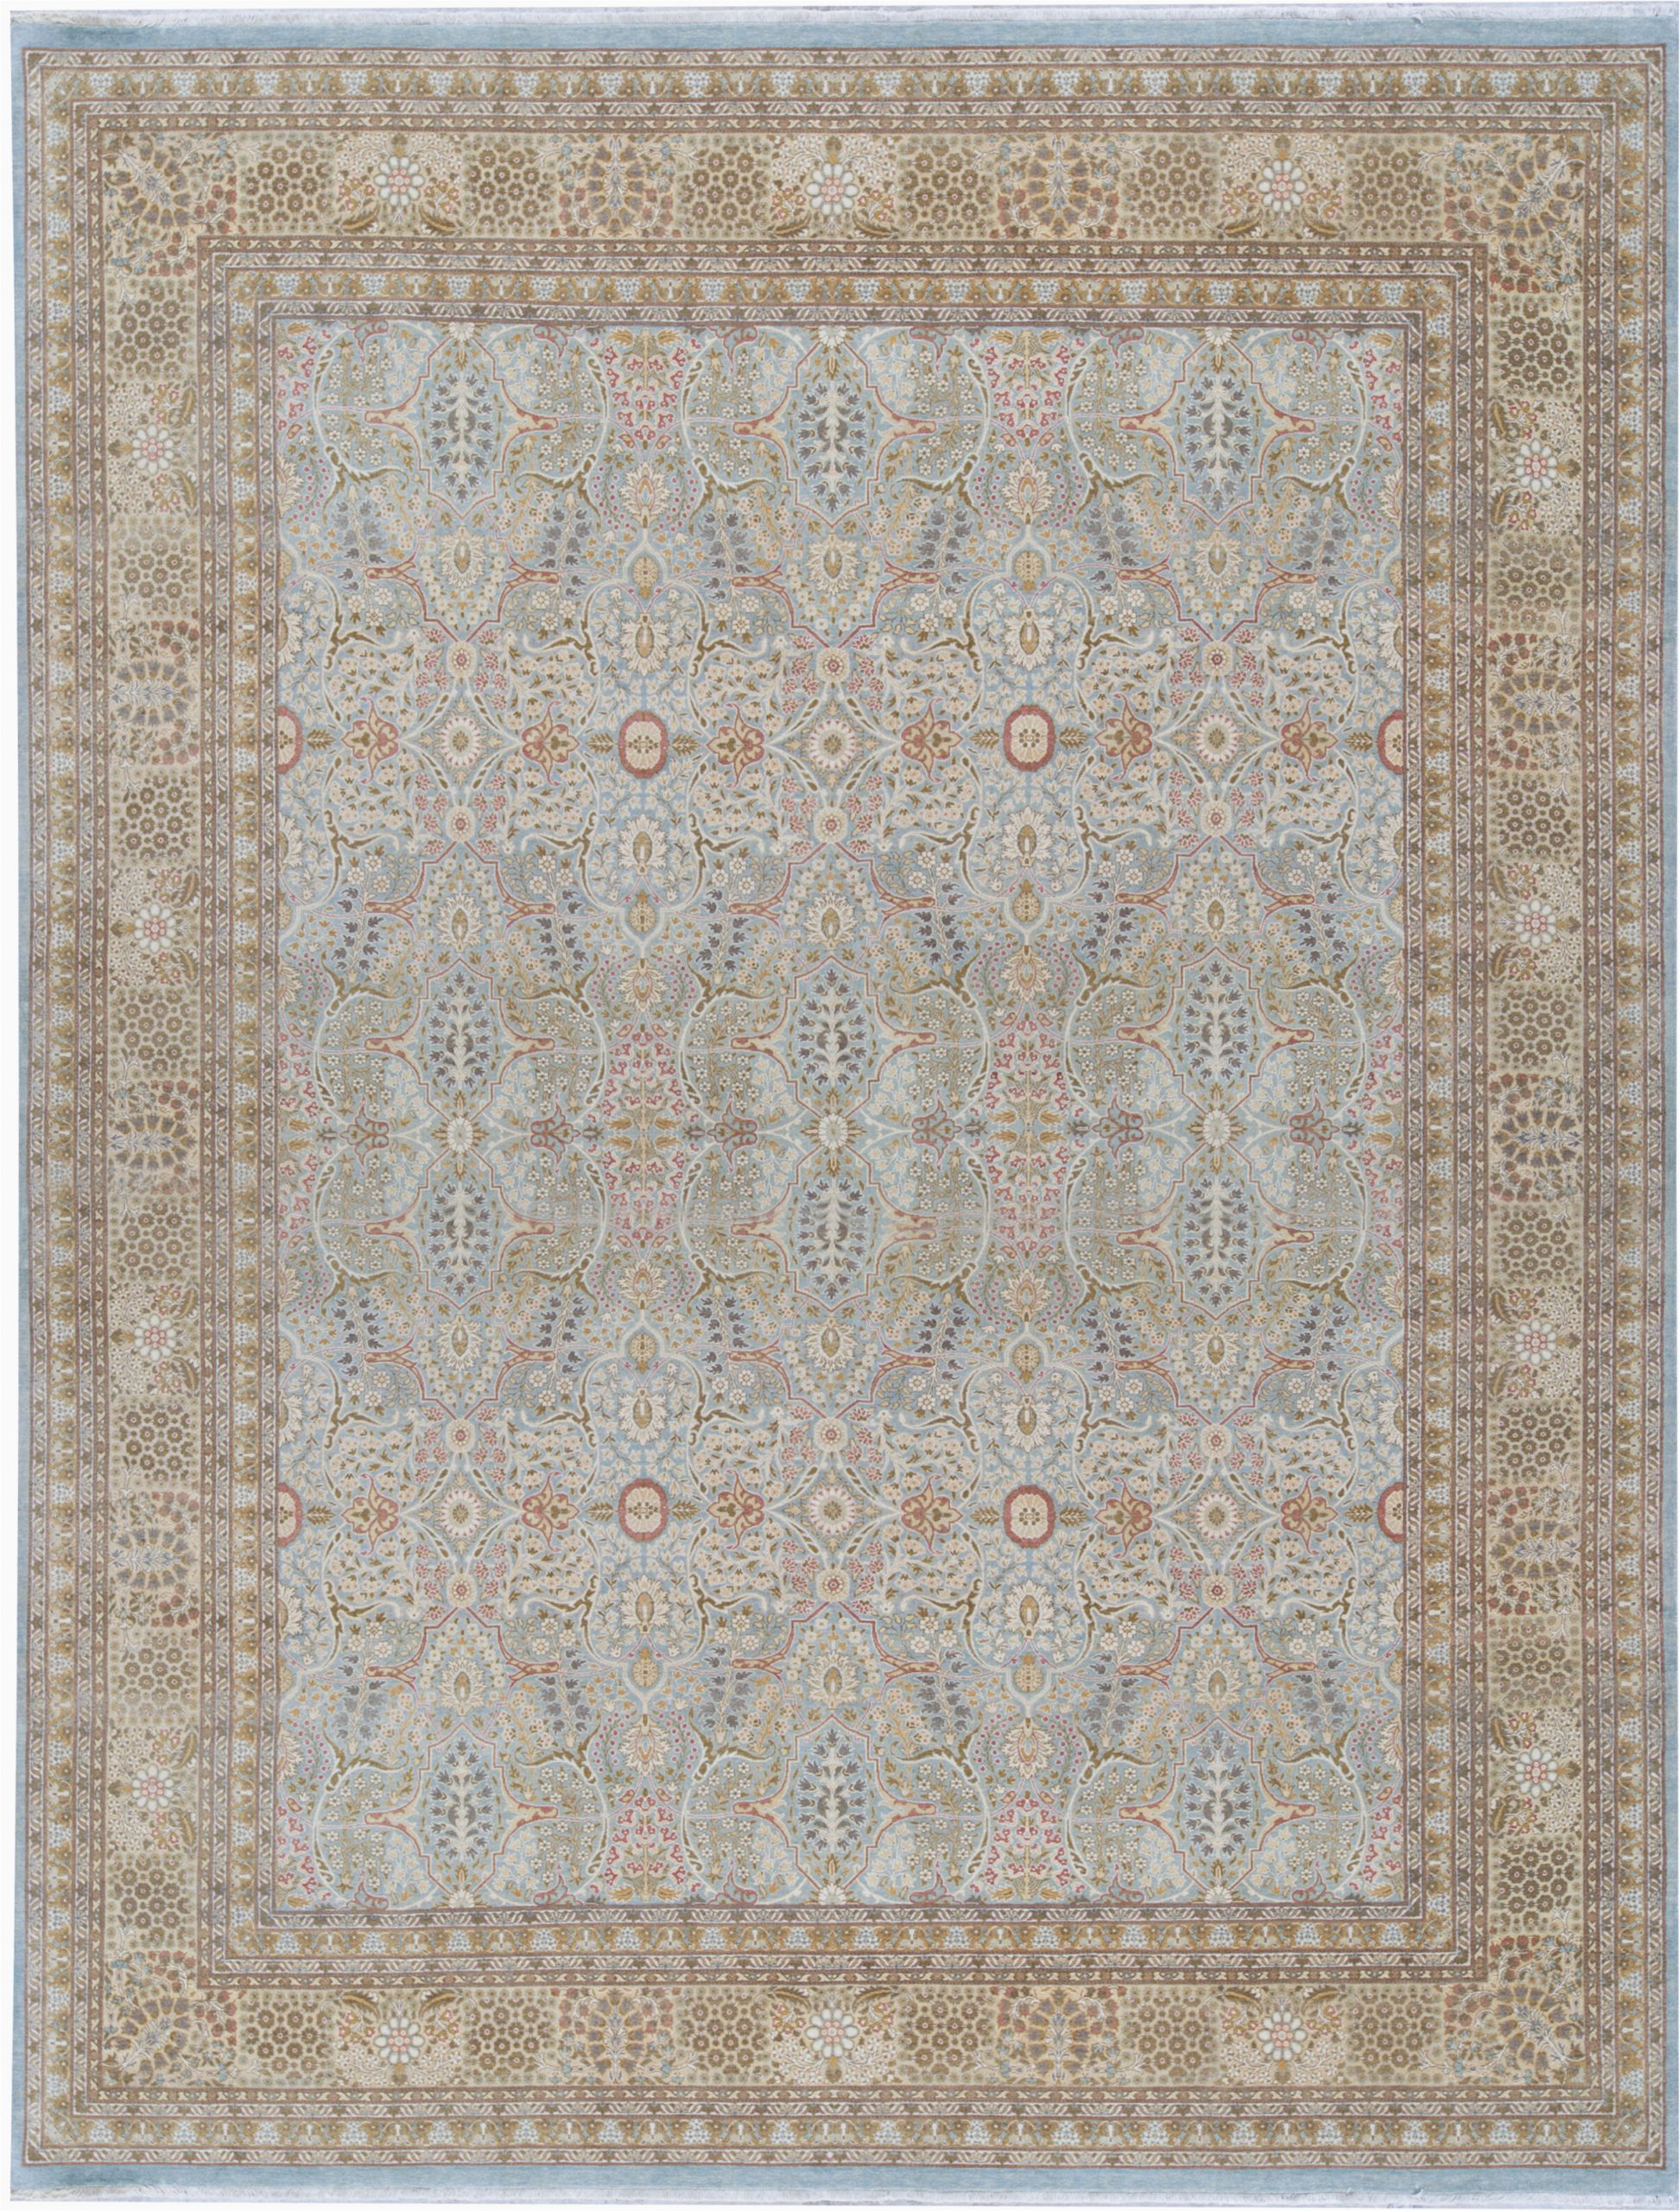 oriental hand knotted wool light bluecream area rug